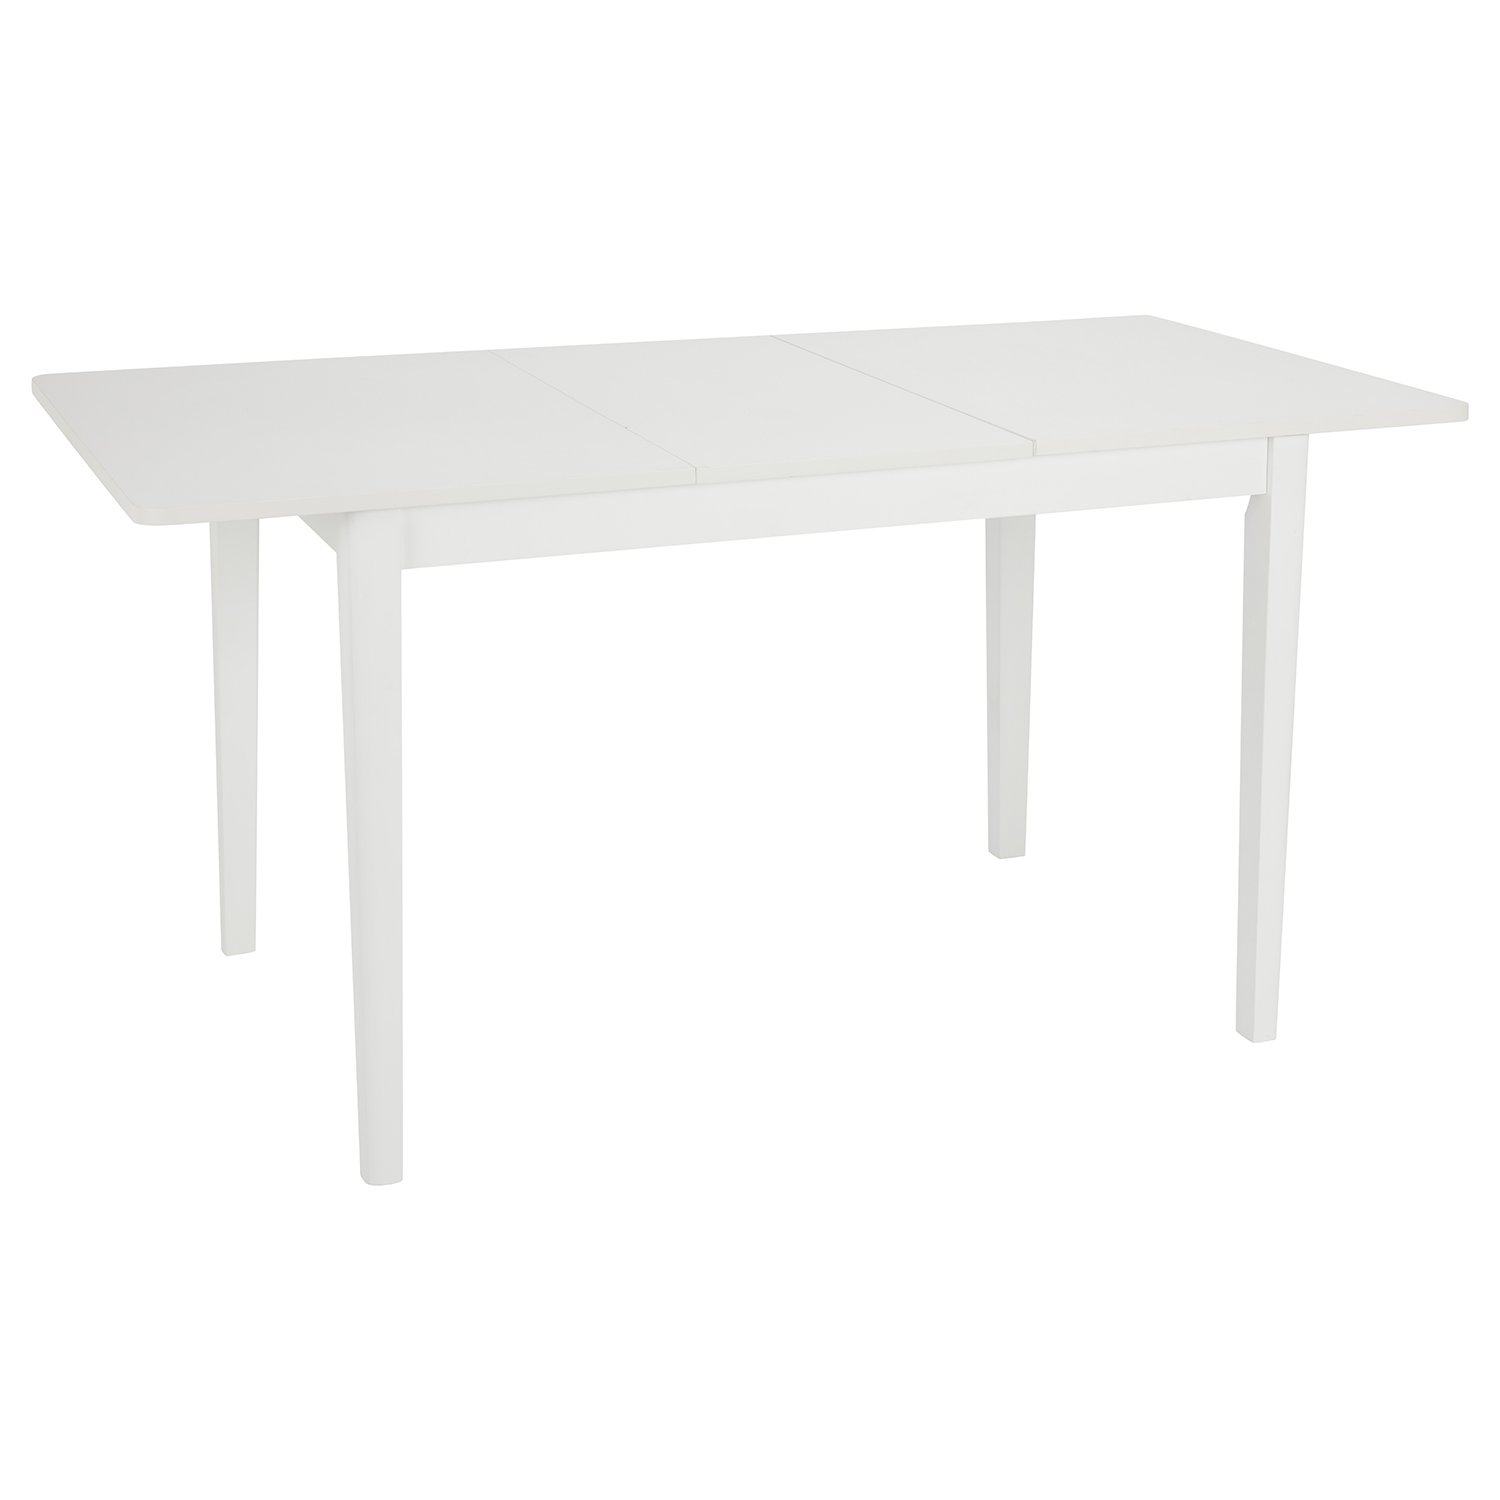 Paul extendable table - large – white - Laura James